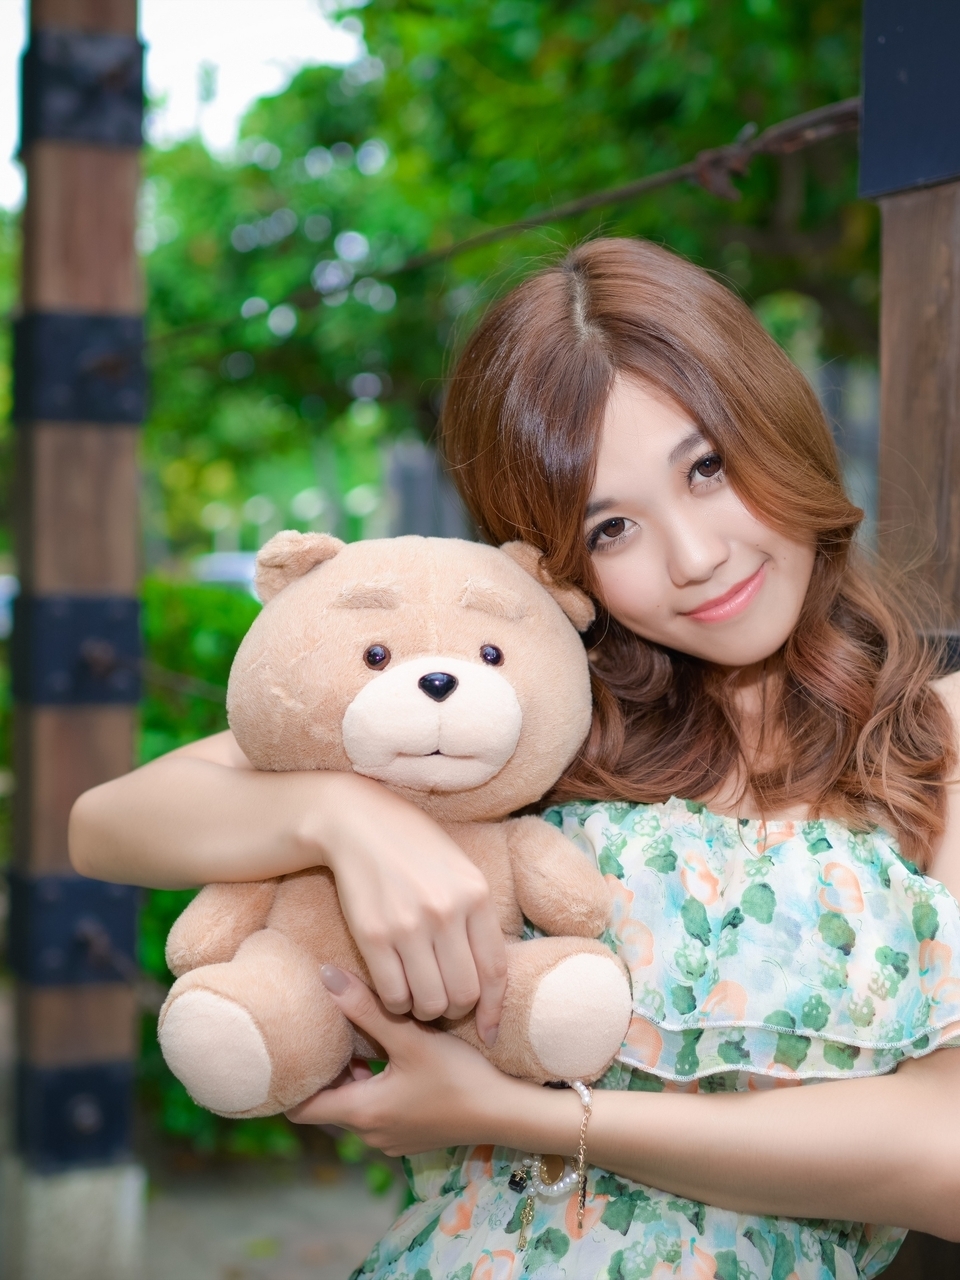 Image: Girl, asian, toy, teddy bear, mood, hugs. 